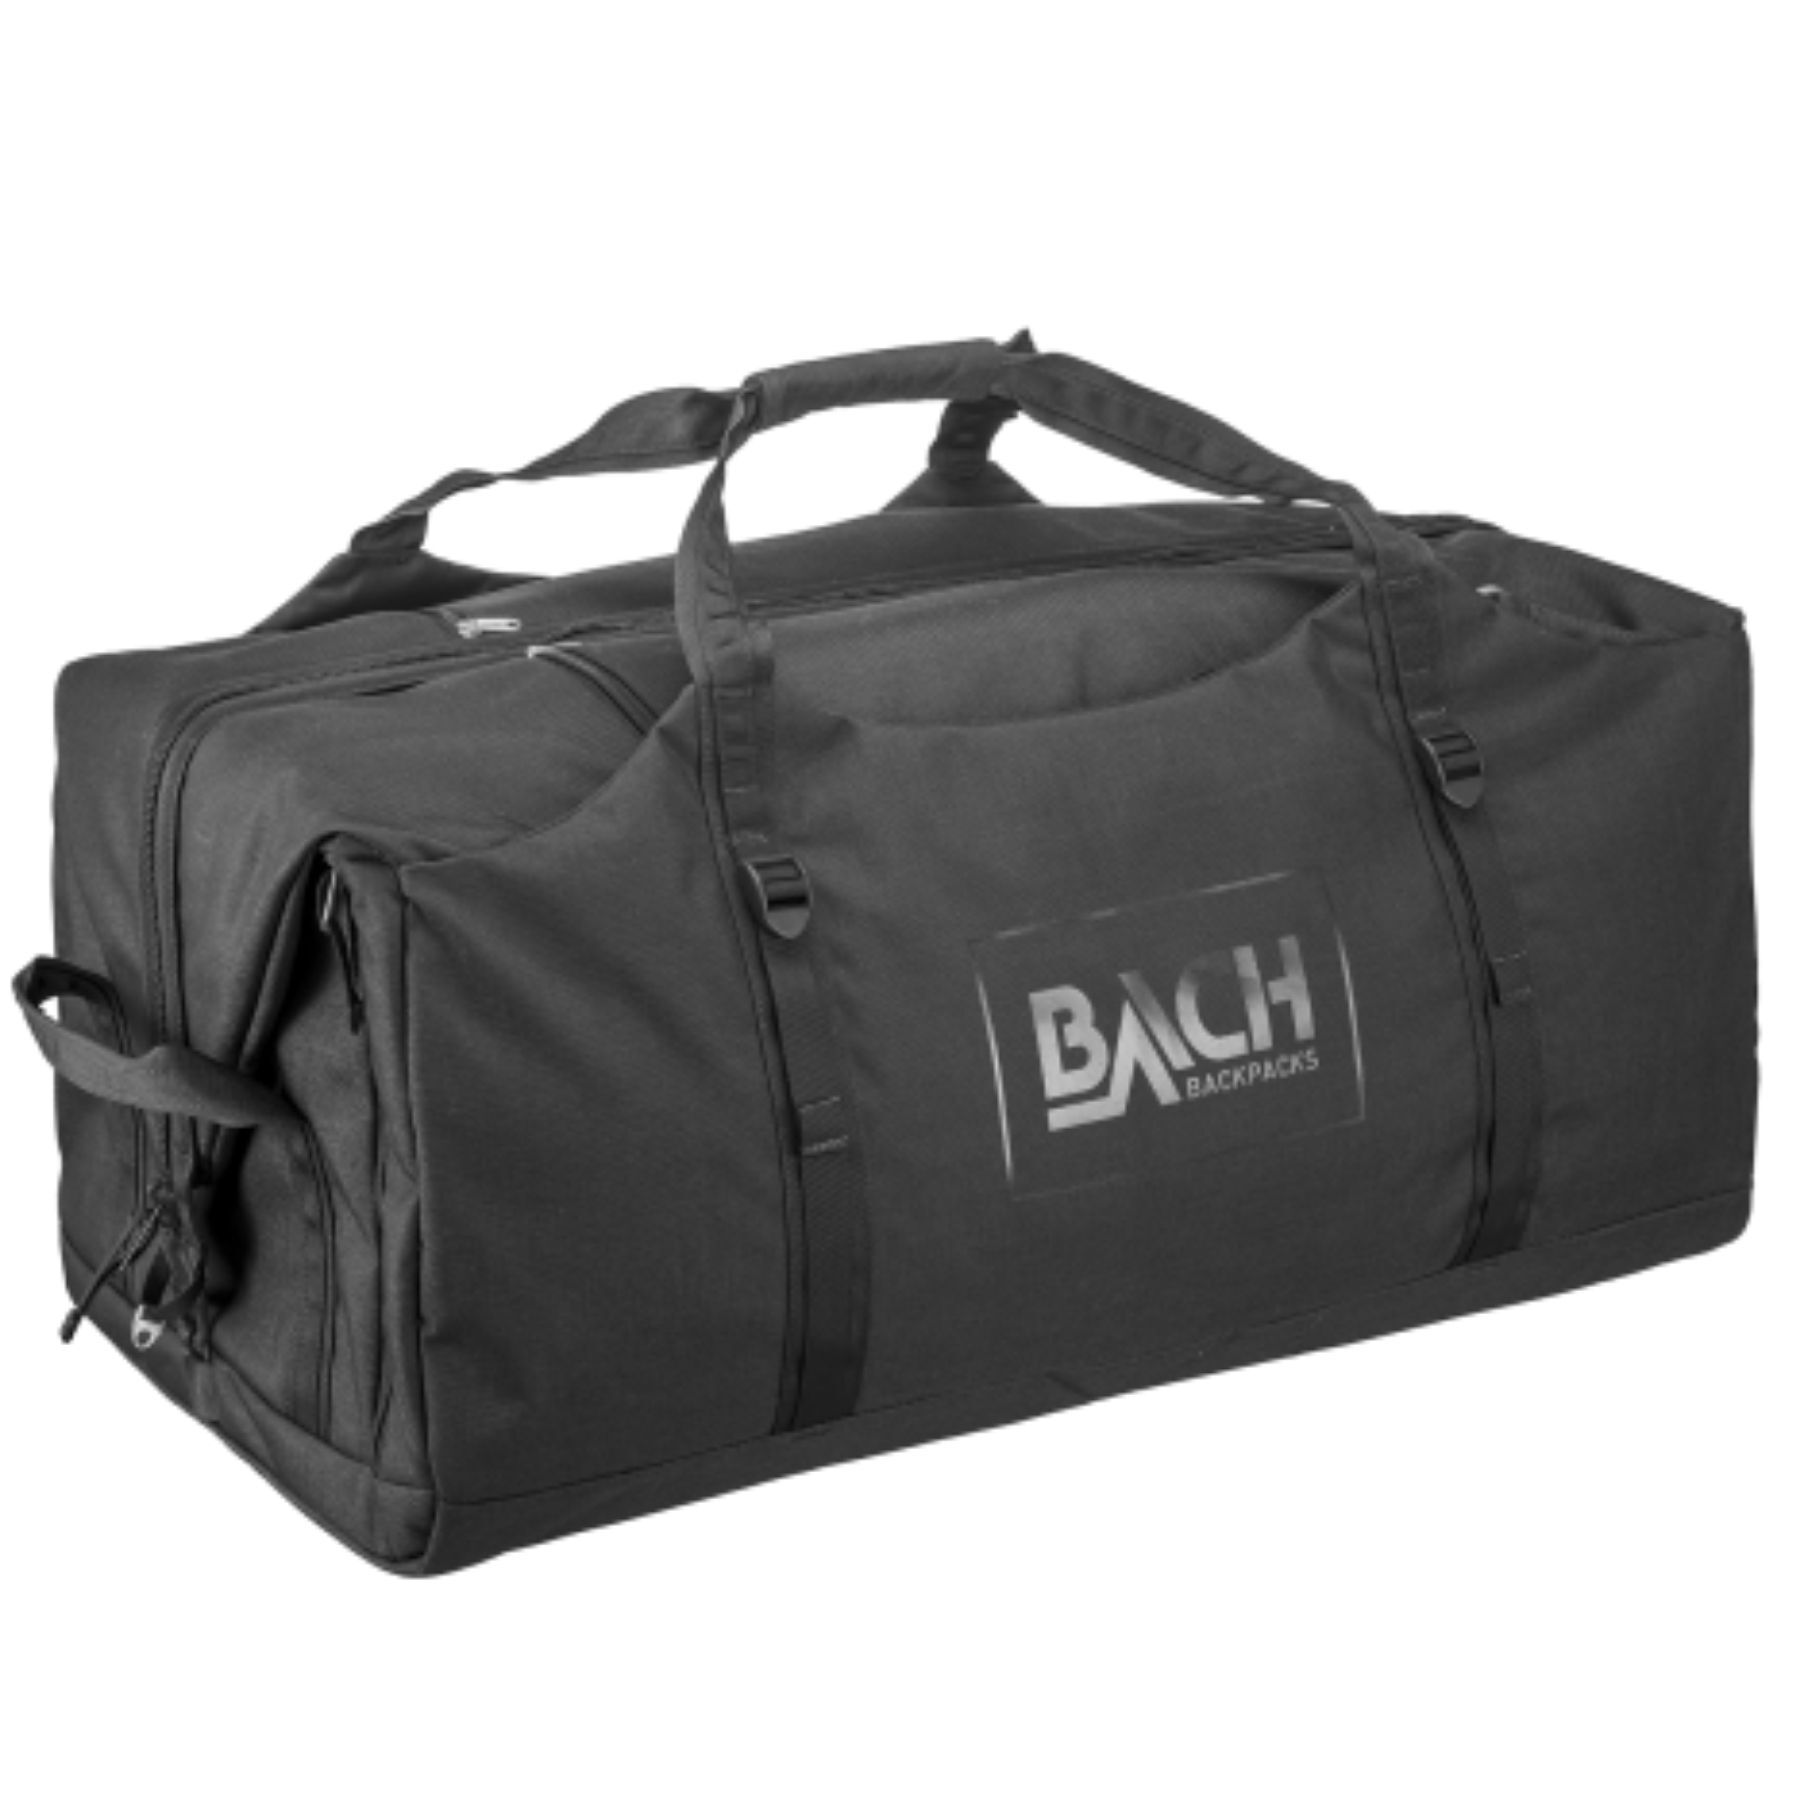 Bach Dr. Duffel 110 - Travel bag